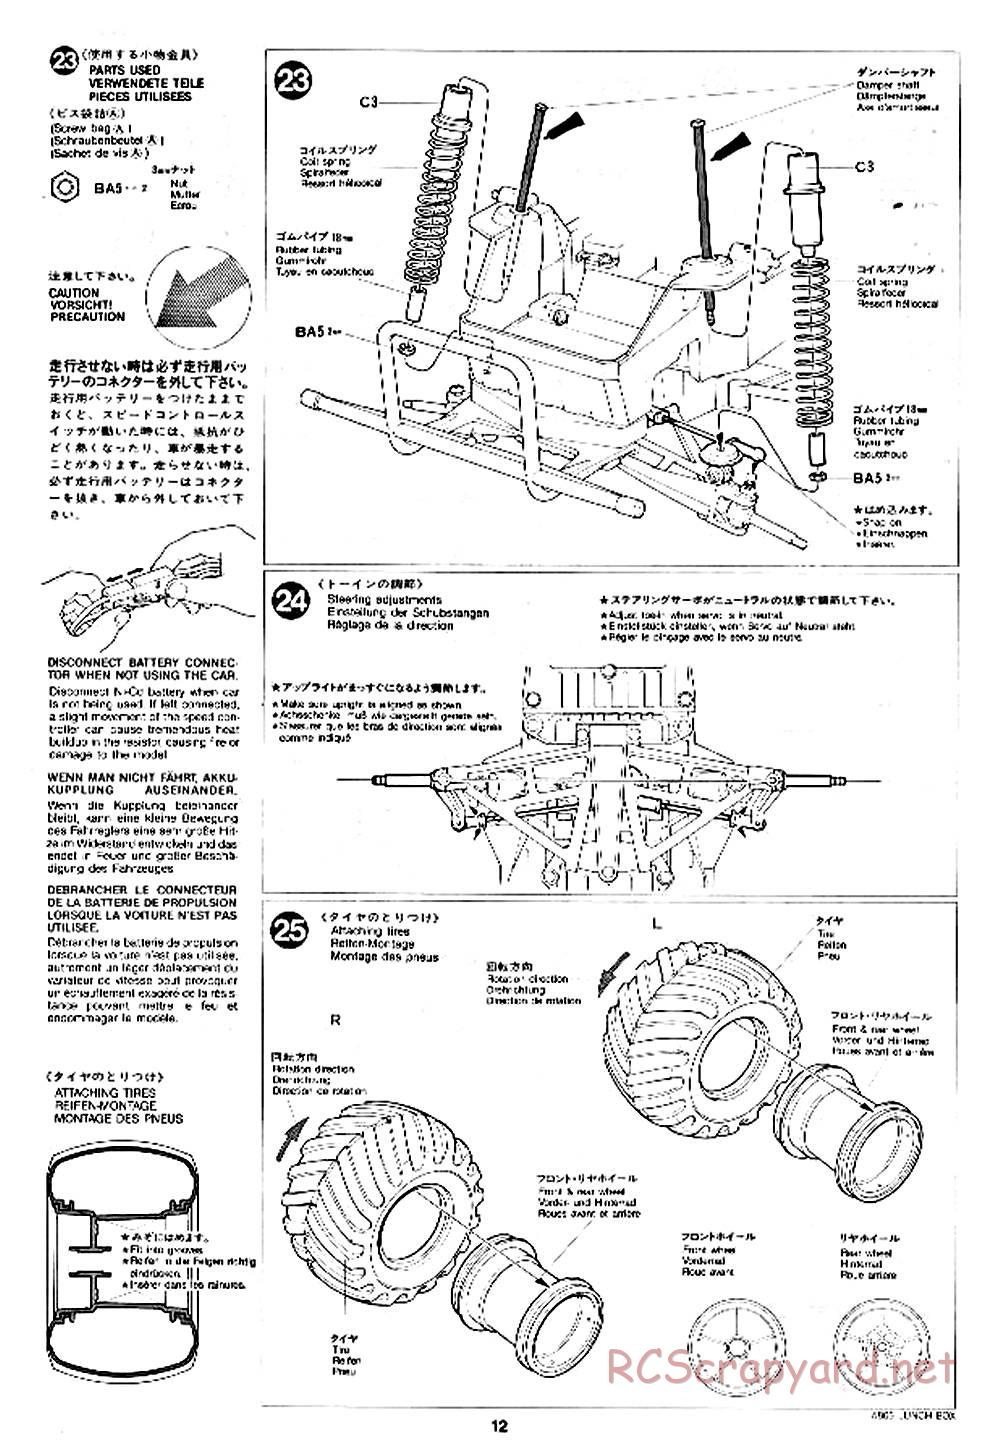 Tamiya - Lunchbox - 58063 - Manual - Page 12